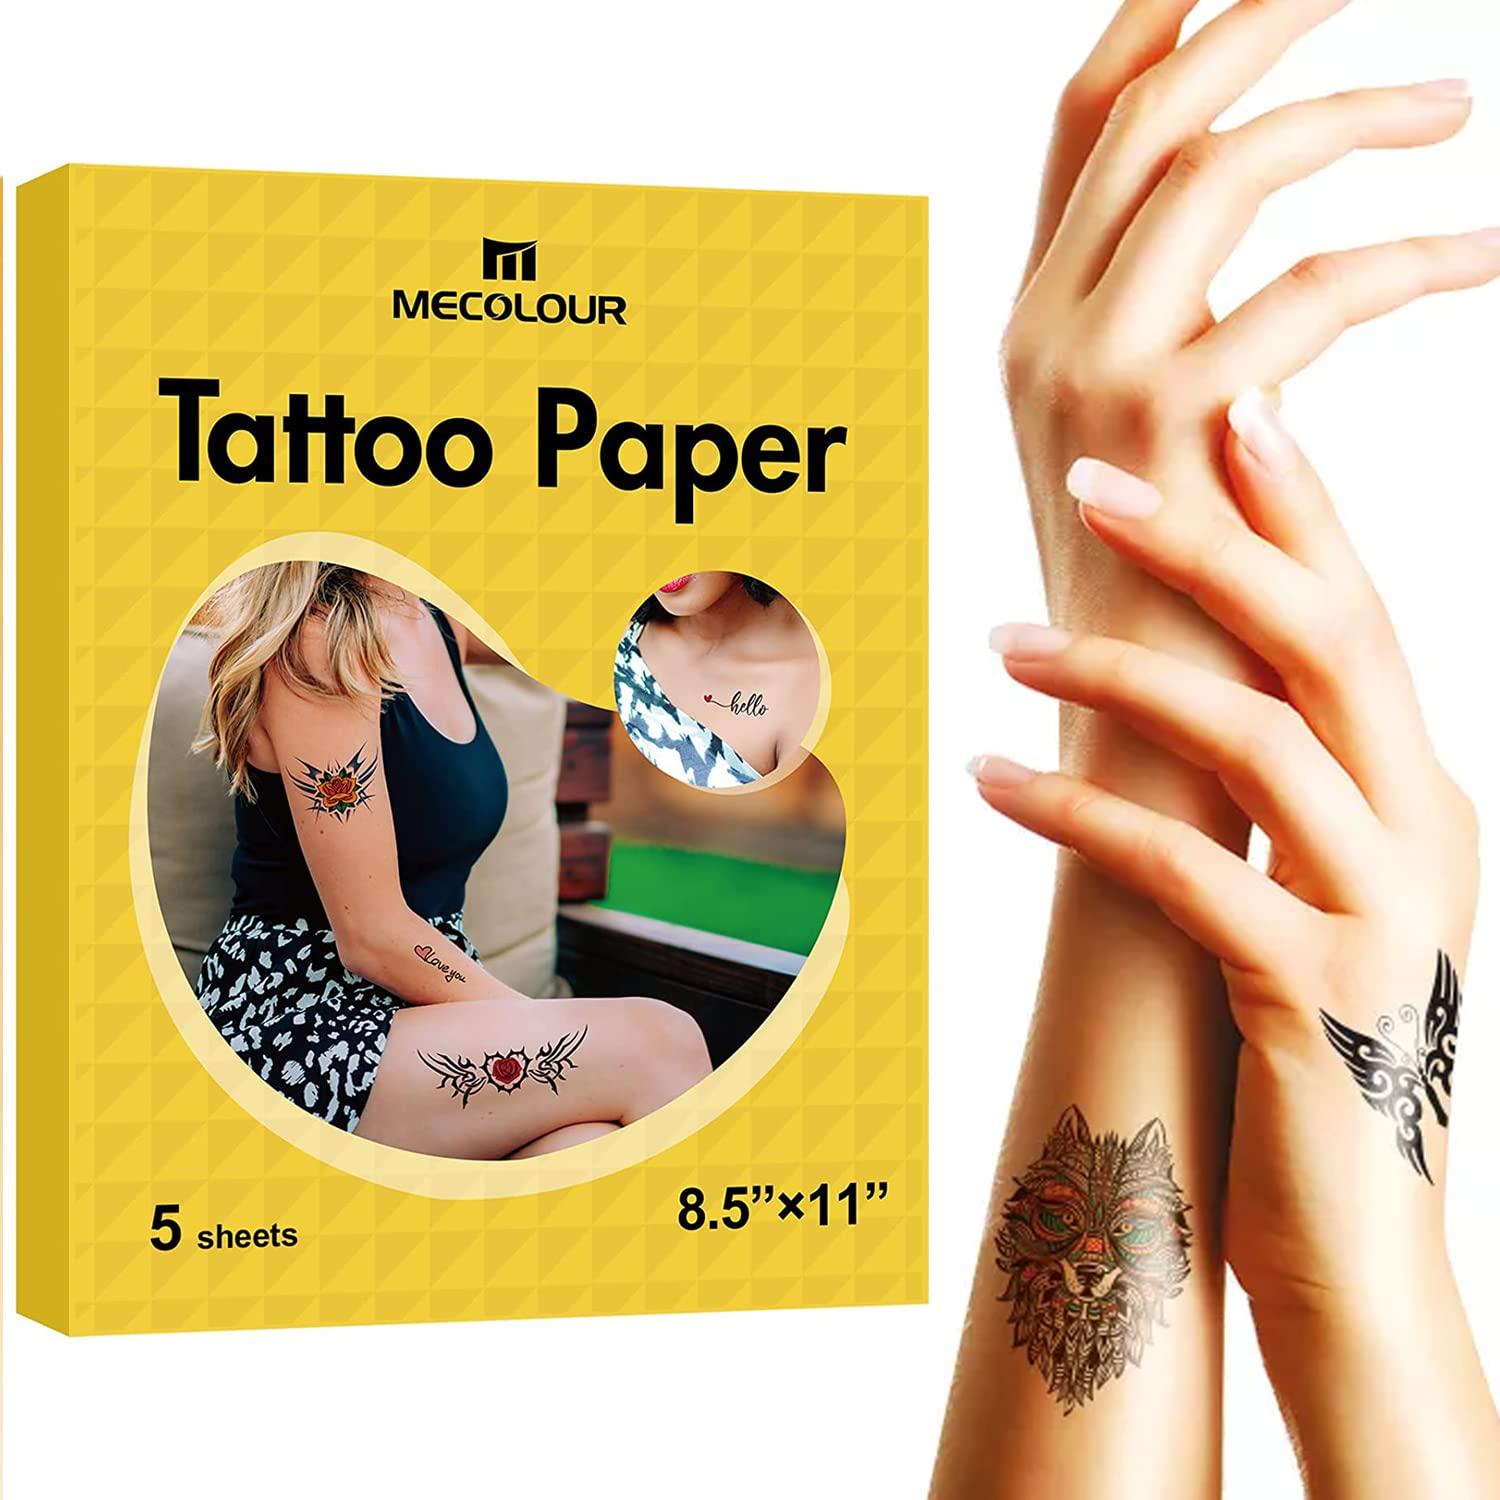 Transfer Paper For Tattoos - Diy Inkjet